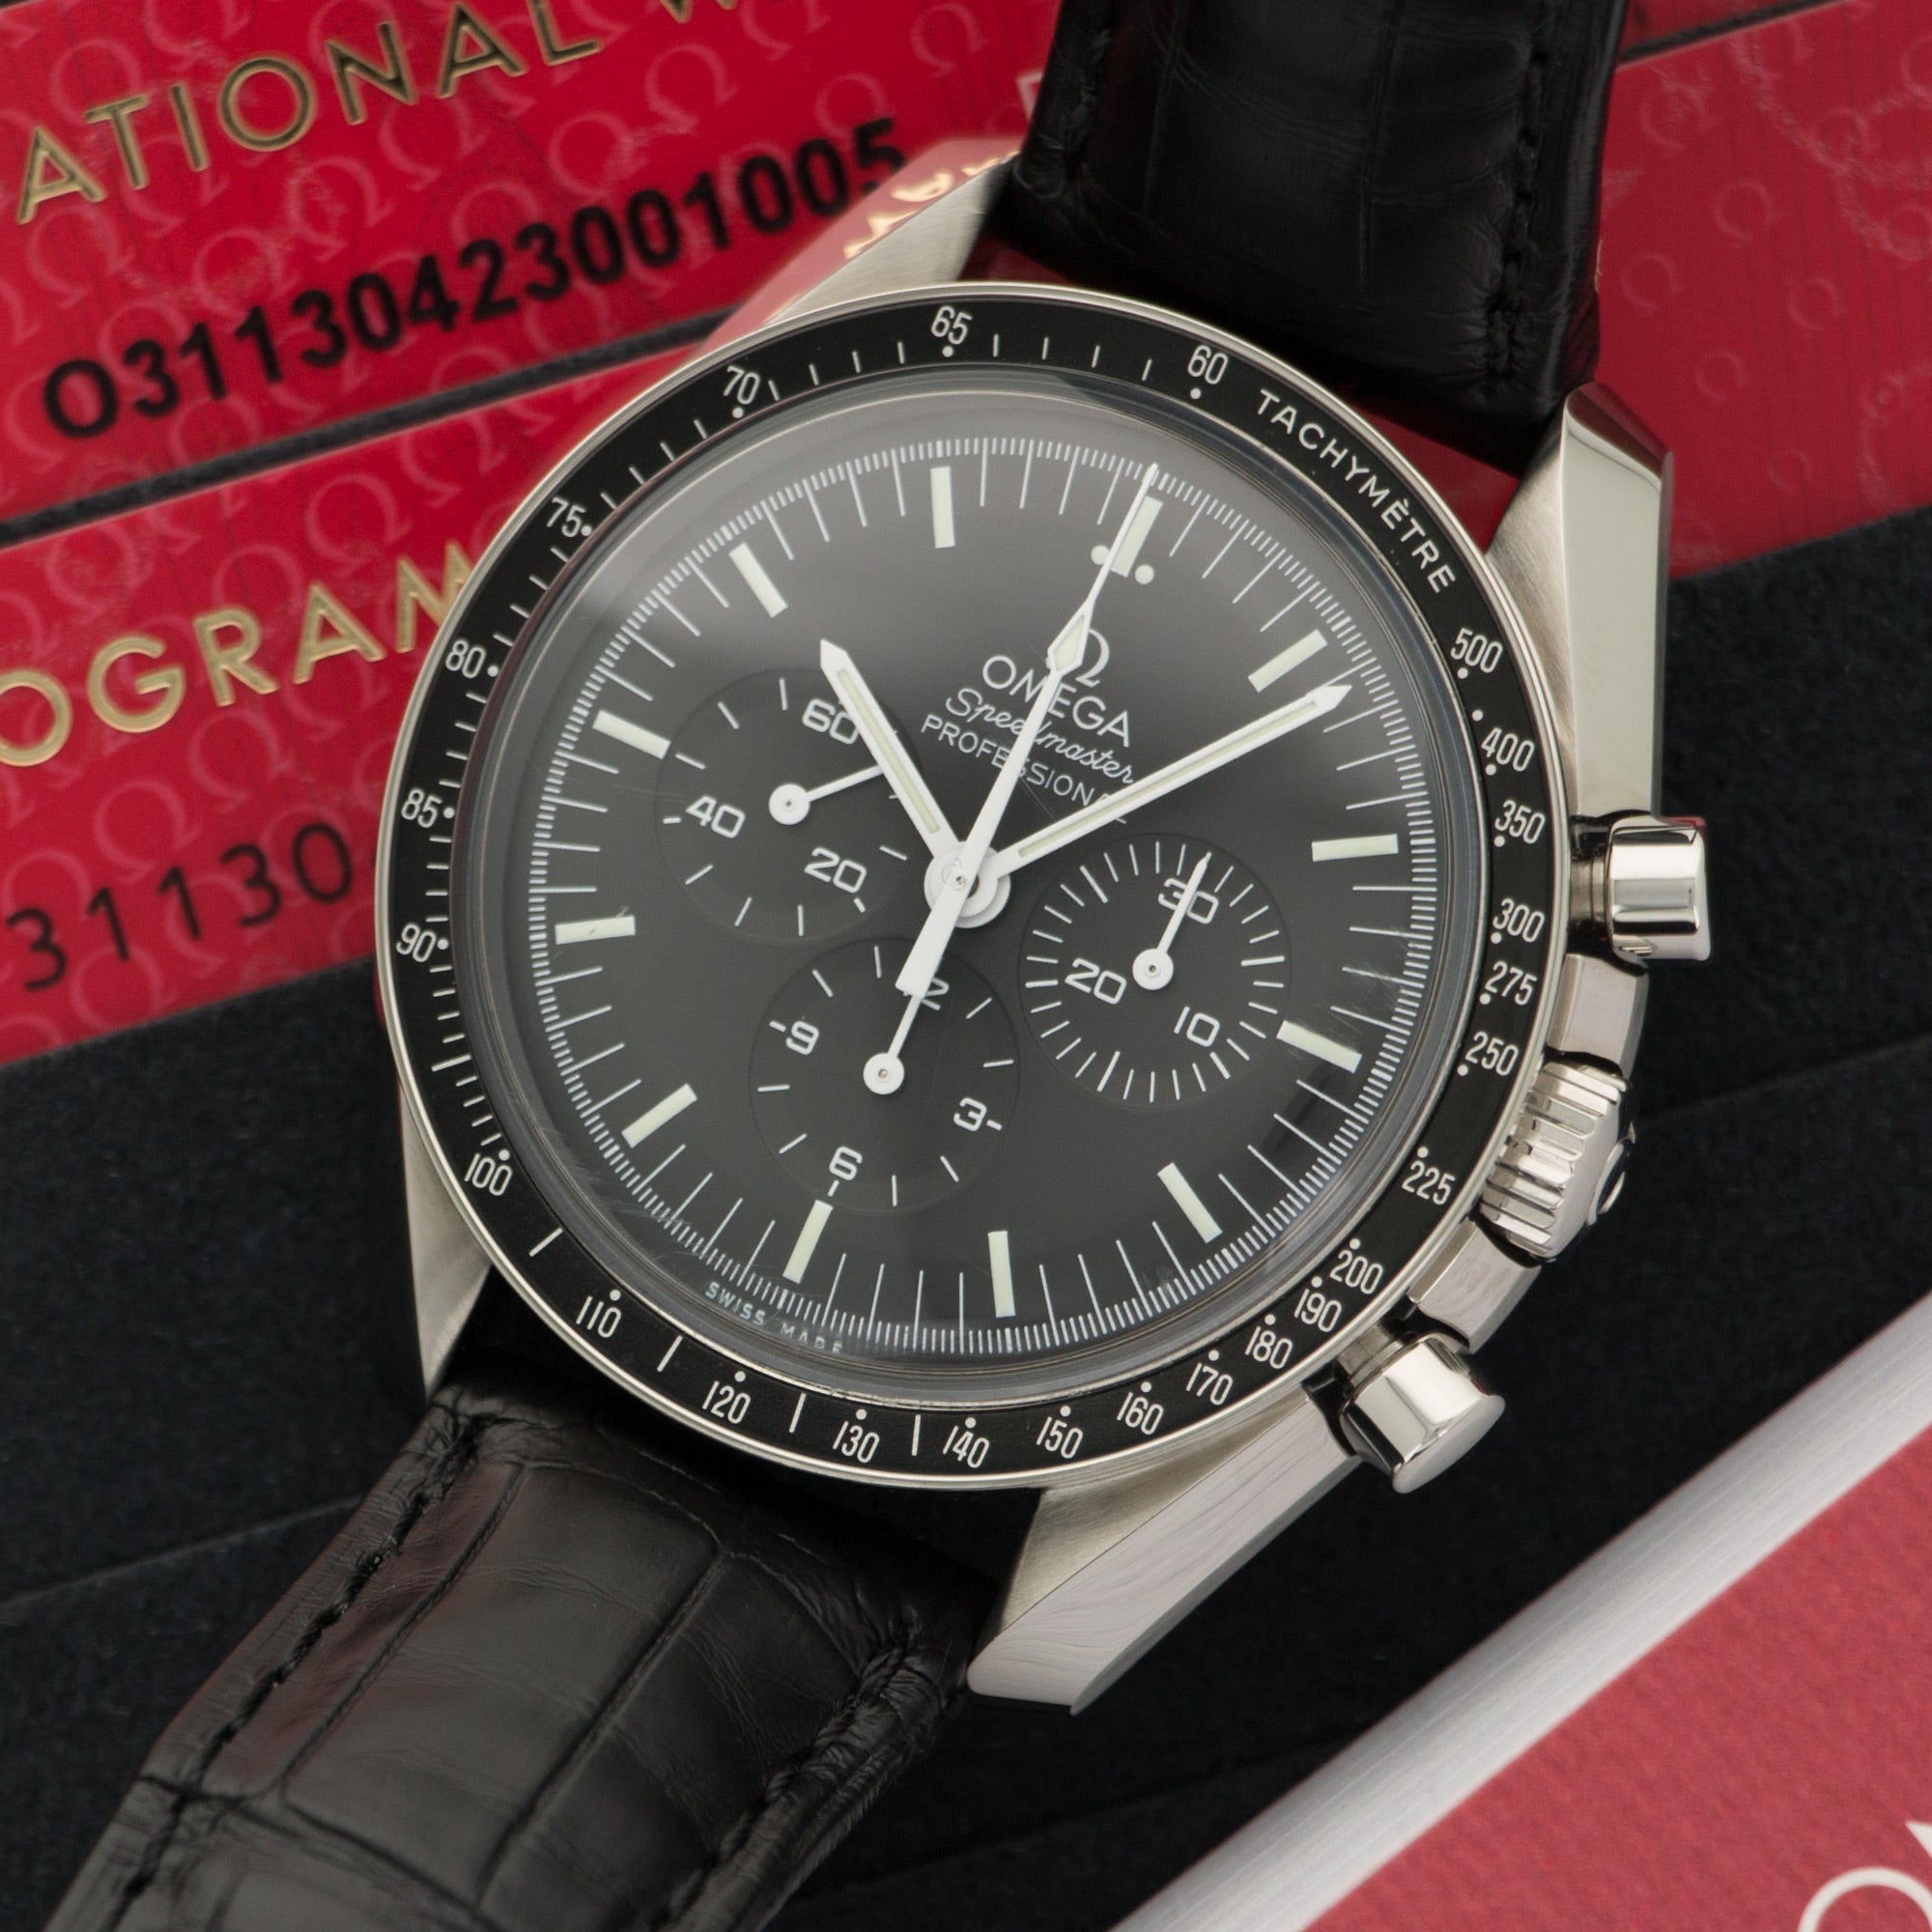 Omega - Omega Steel Speedmaster Professional Chronograph Moon watch - The Keystone Watches